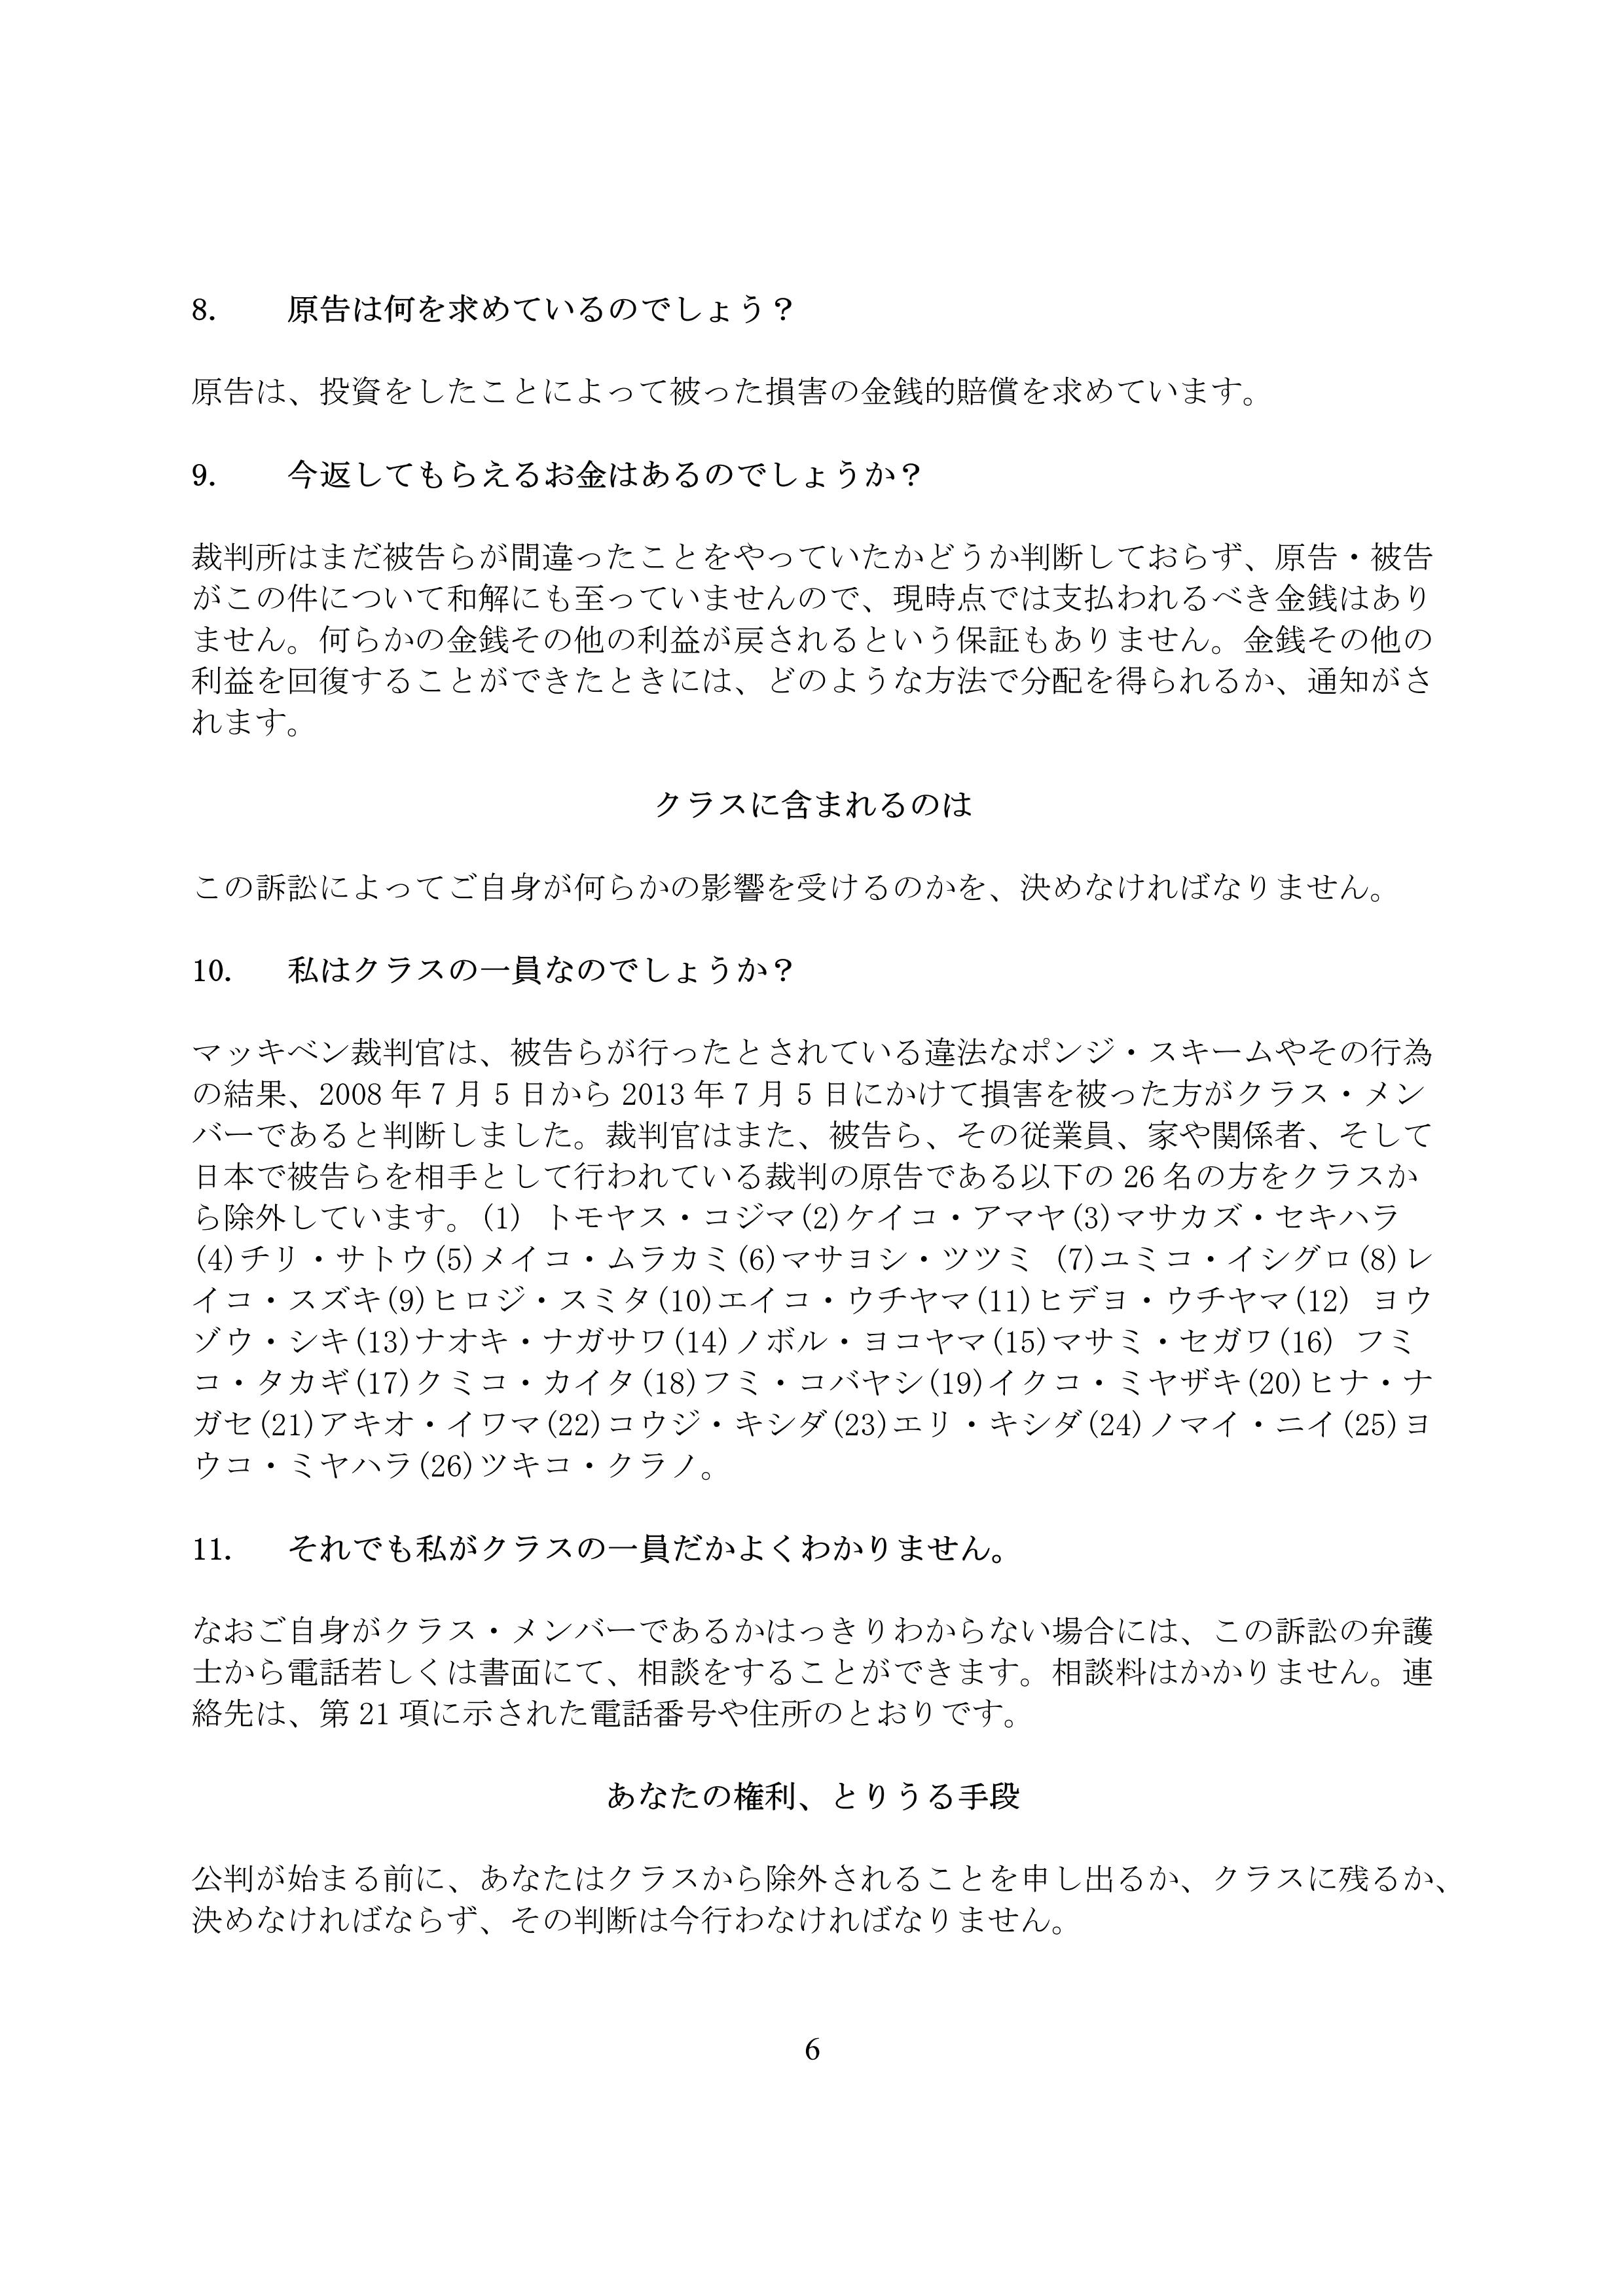 MRI Class Cert Notice_Japanese translation_06